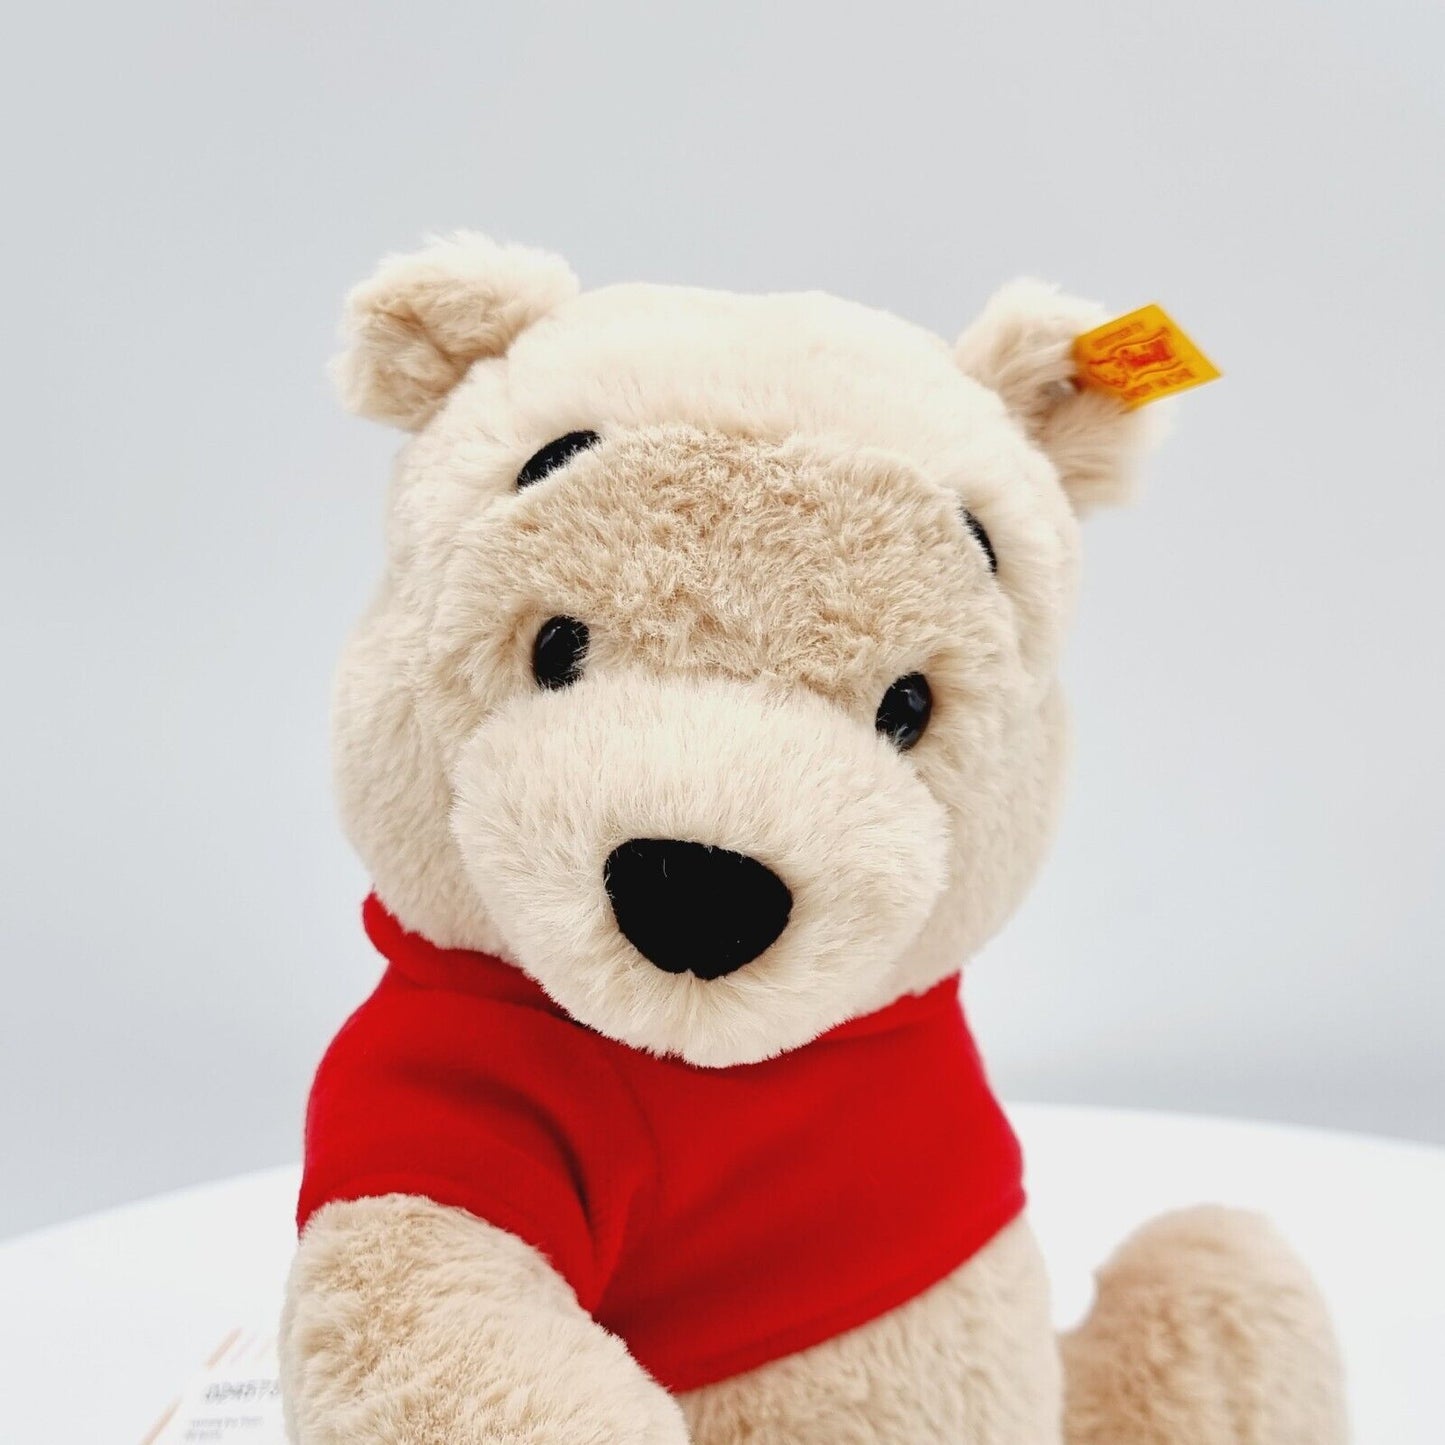 Steiff 024573 Teddybär Winnie the Pooh 29 cm blond Plüsch